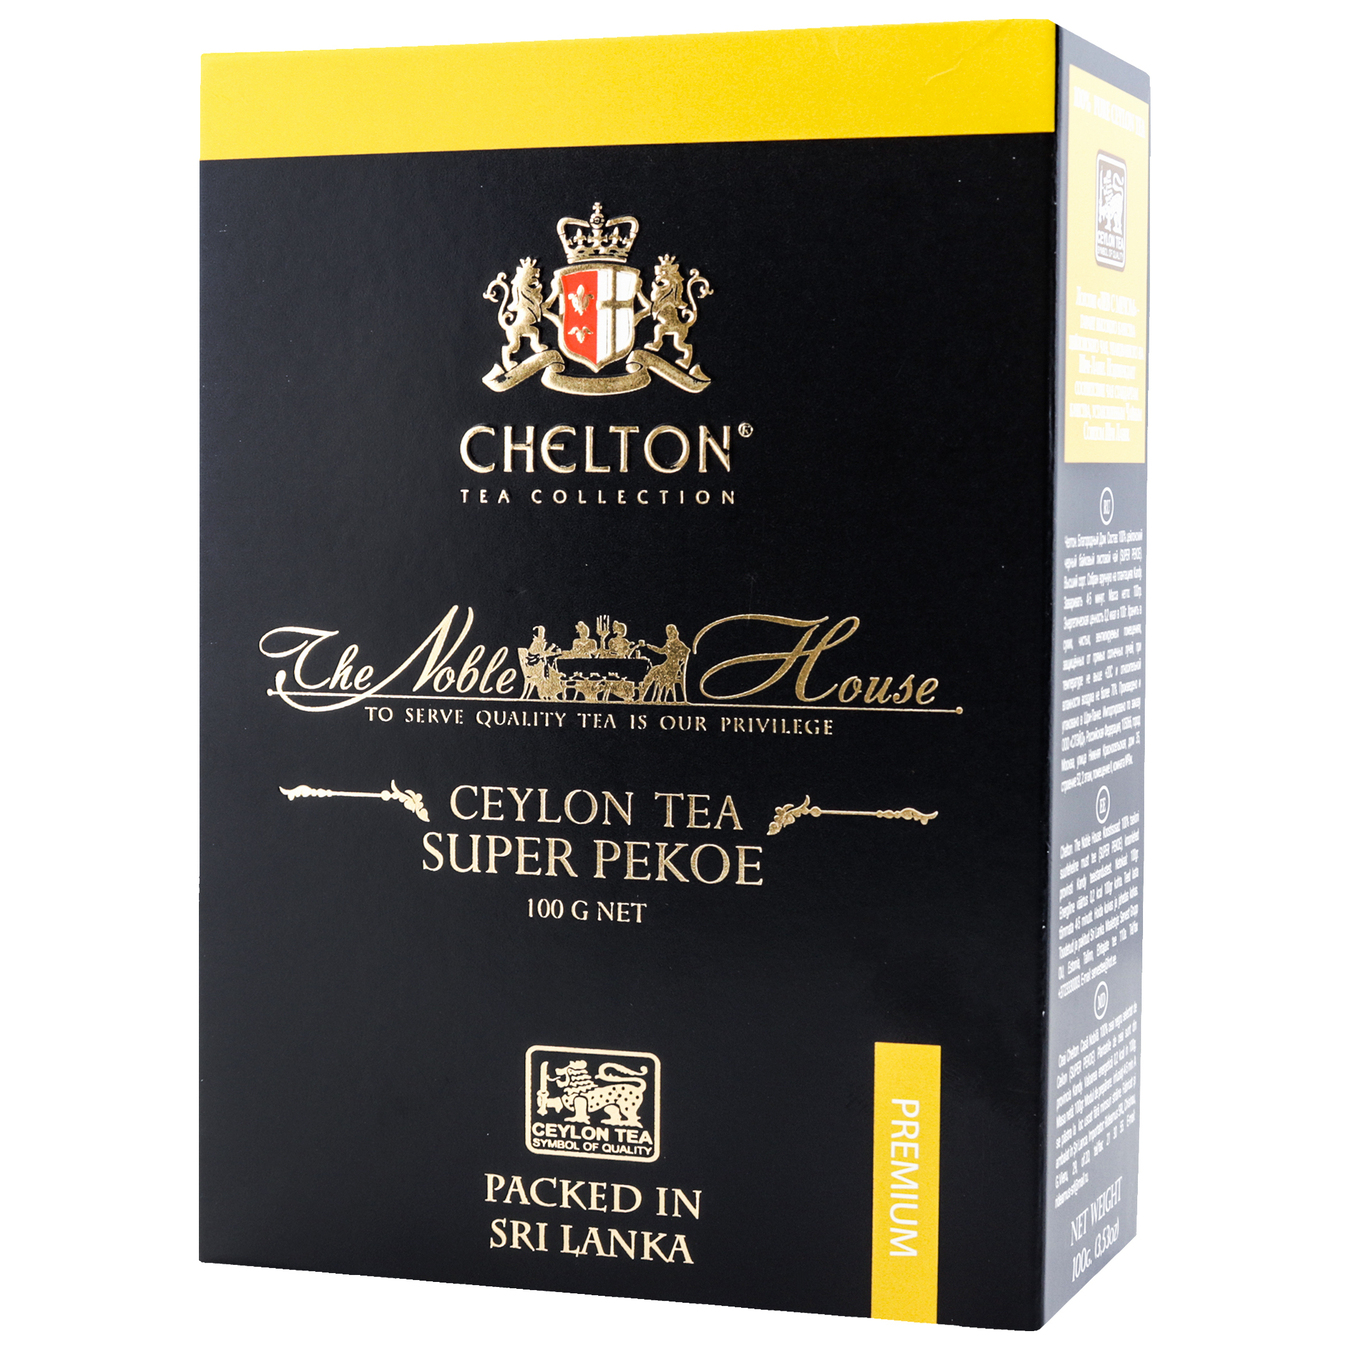 Chelton The Noble House Super Pekoe Ceylon black tea 100g